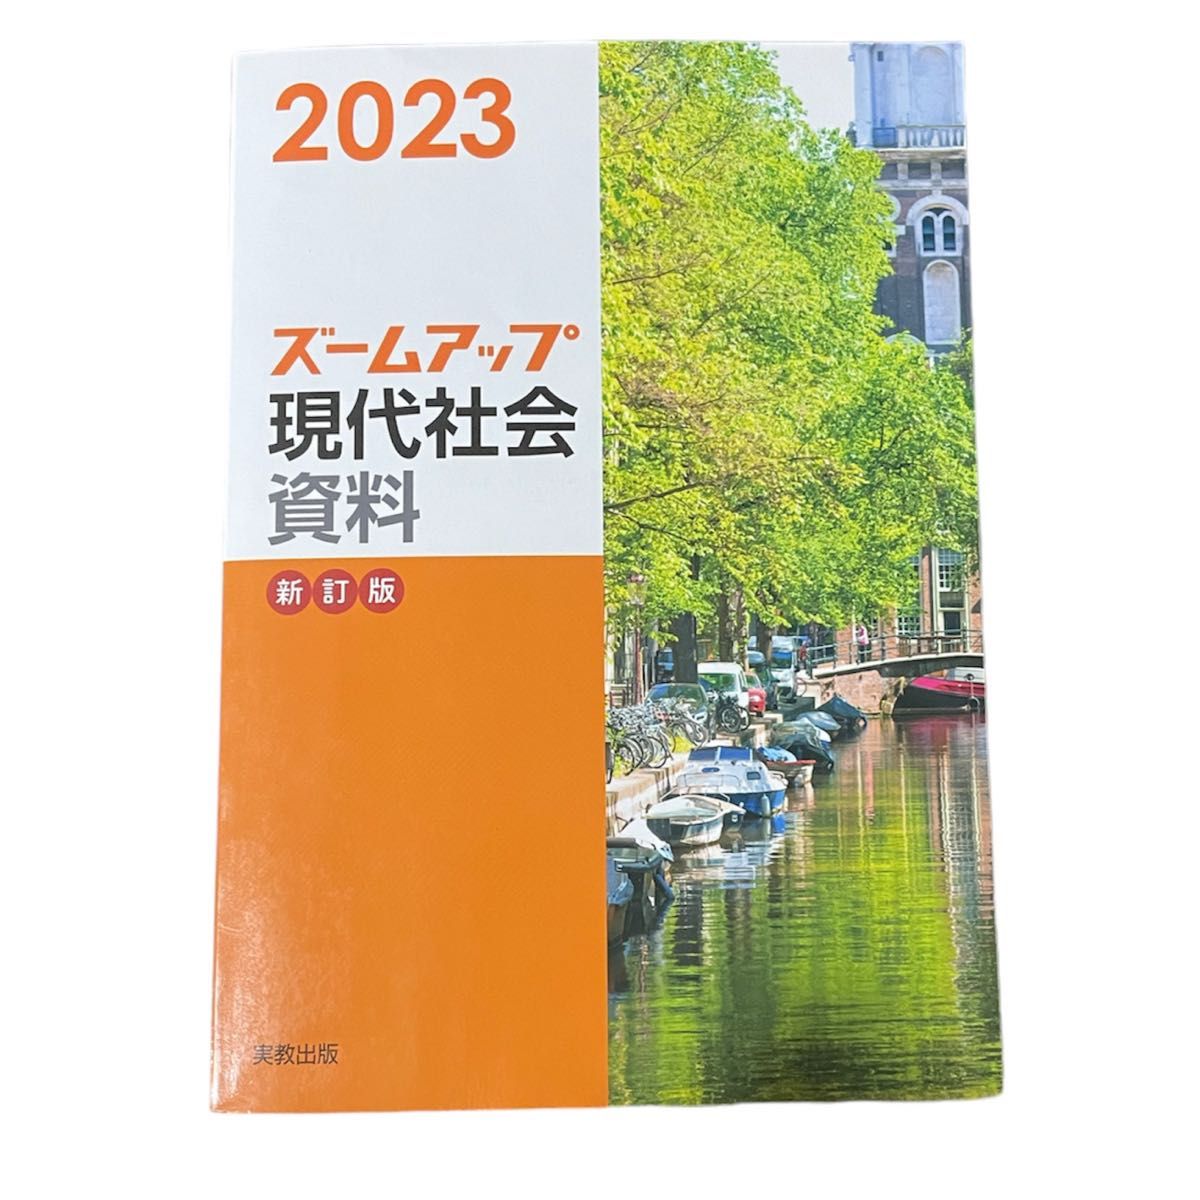 ズームアップ現代社会 資料 2023 教科書 参考書